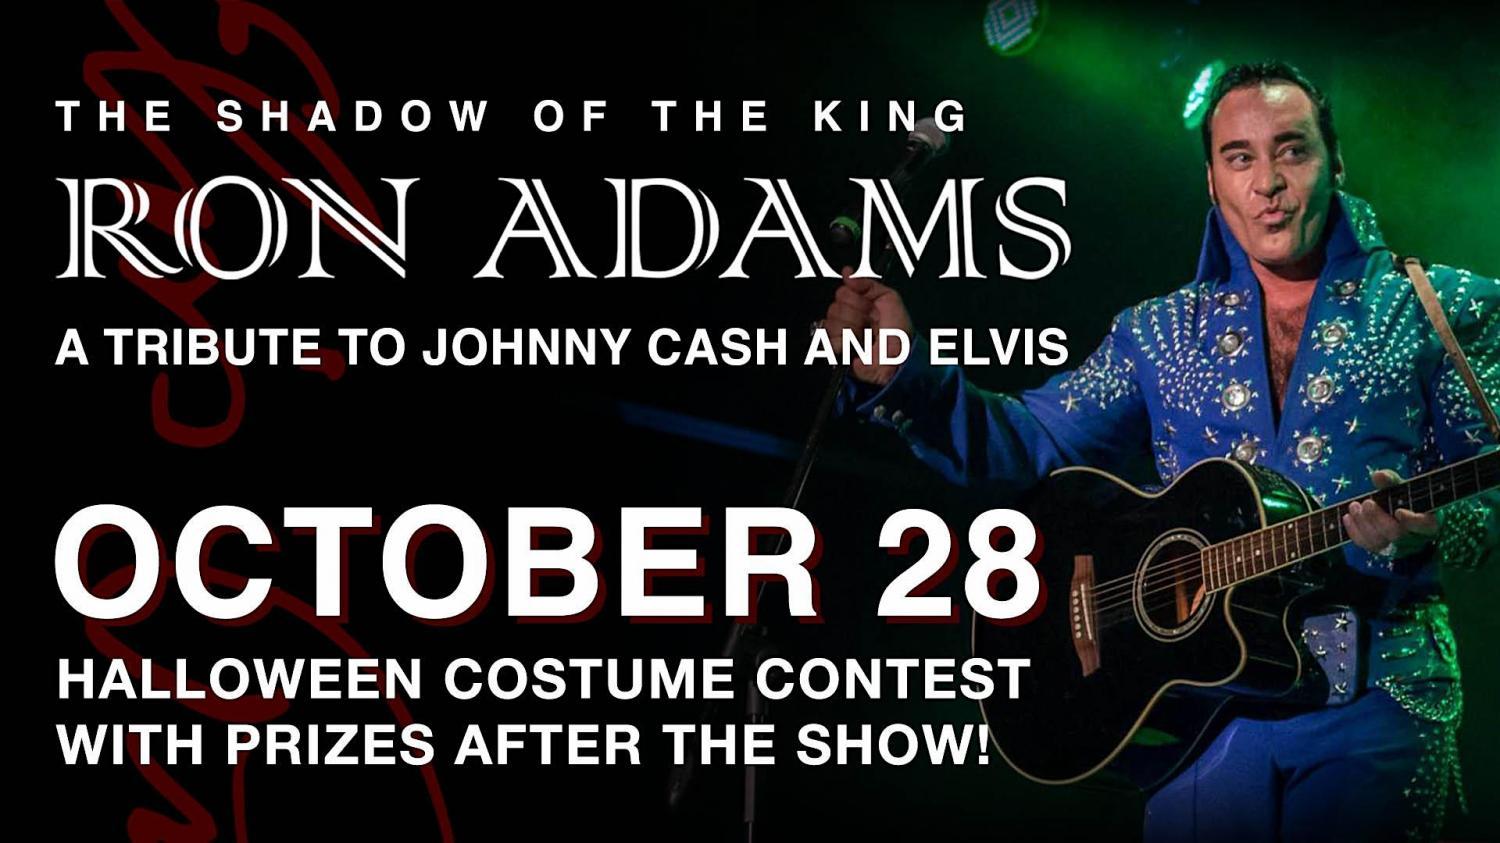 Ron Adams | Johnny Cash & Elvis Tribute + Halloween Costume Contest!
Fri Oct 28, 7:00 PM - Fri Oct 28, 7:00 PM
in 9 days